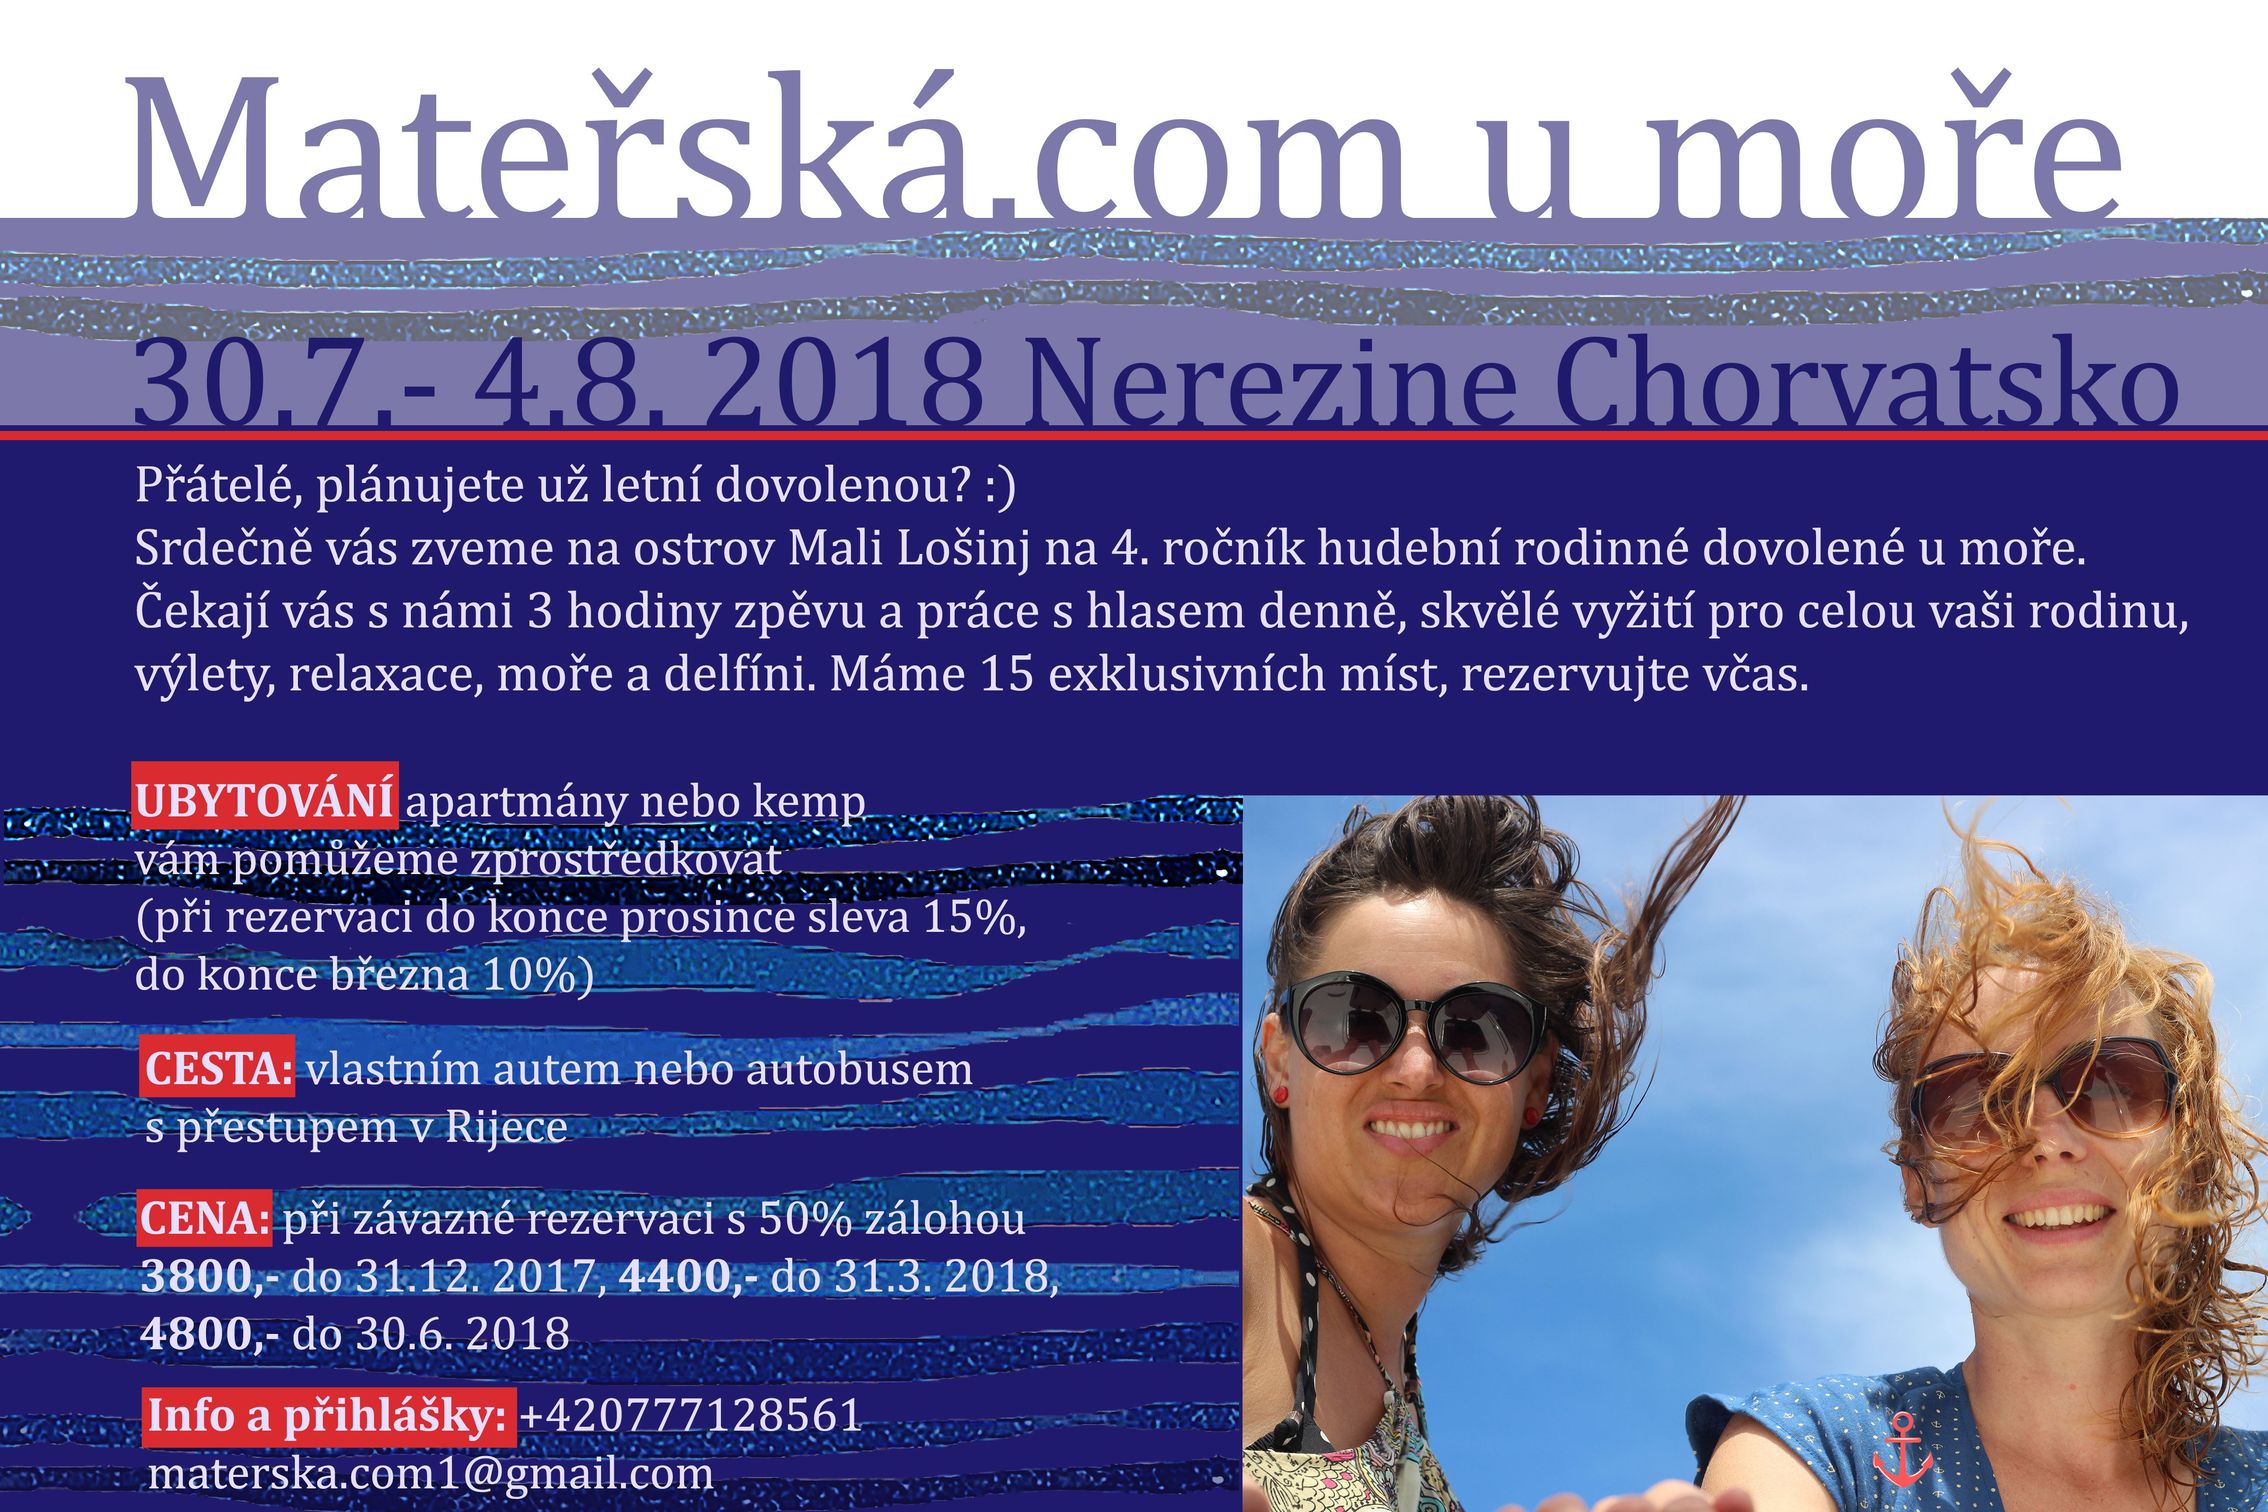 Mateřská.com u moře